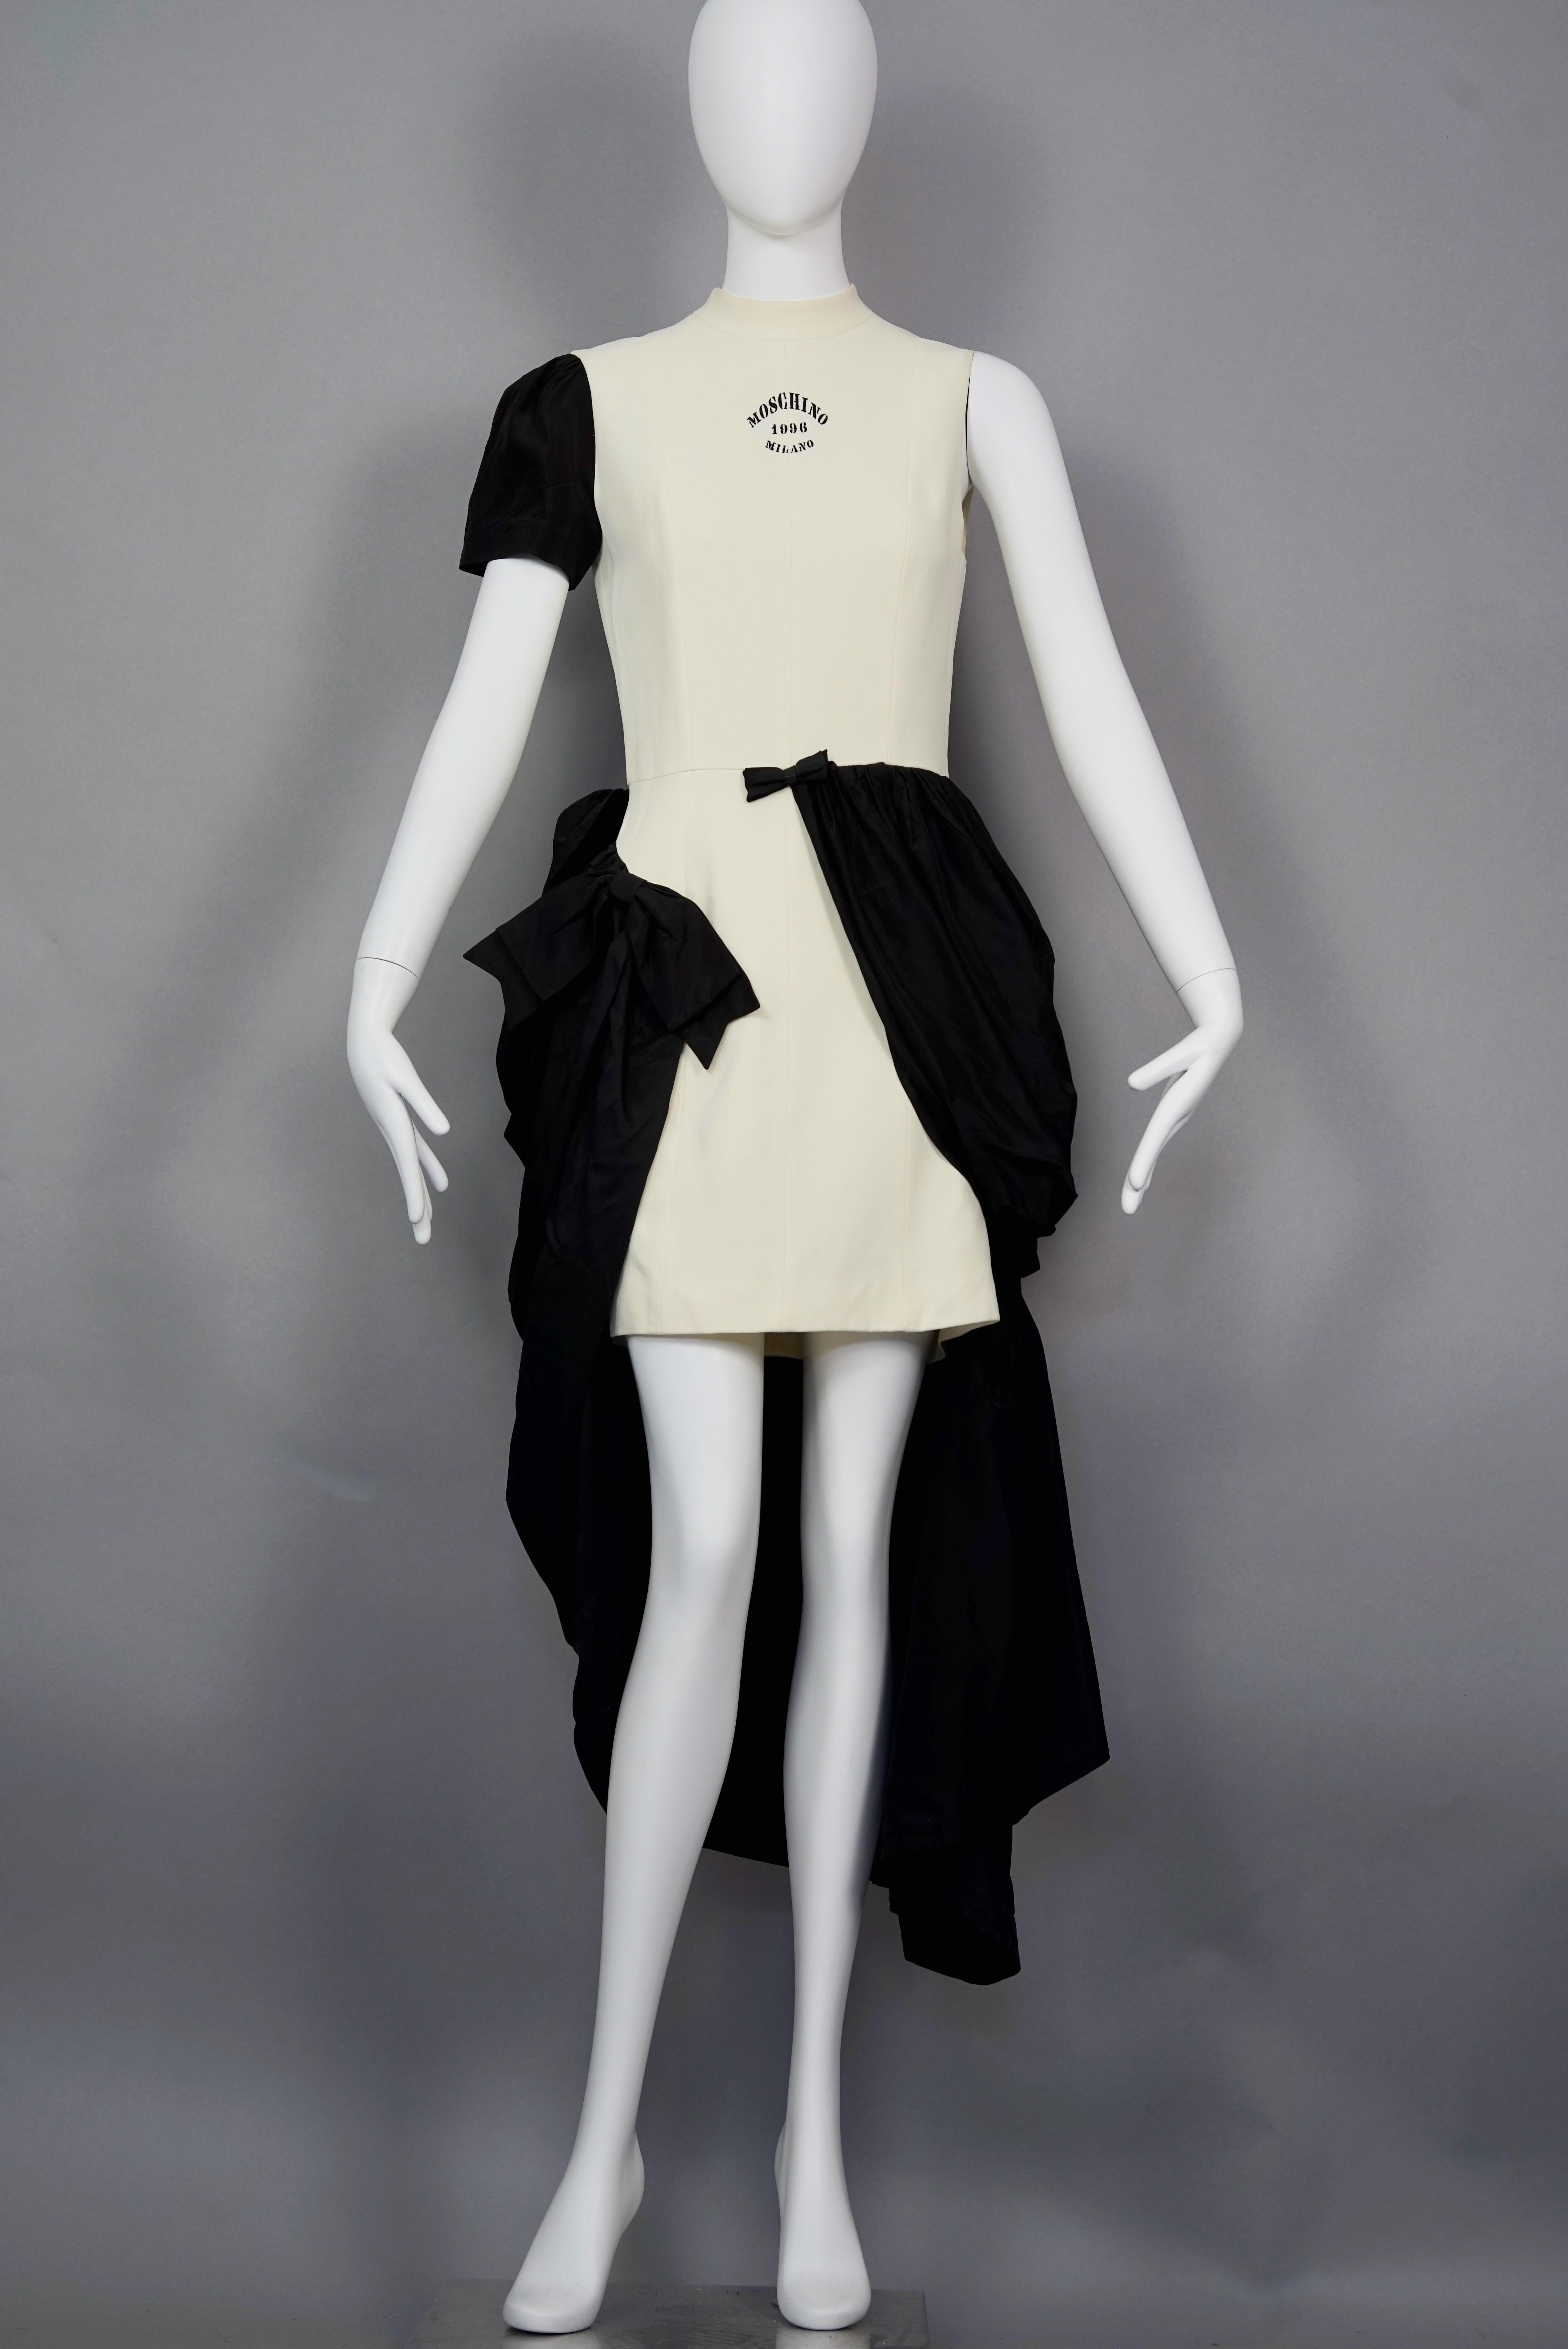 Vintage 1992 MOSCHINO Stockman Dressmaker Dummy Drape Dress

Measurements taken laid flat, double bust, waist and hips:
Shoulder: 13.77 inches (35 cm)
Sleeve: 8.26 inches (21 cm)
Bust: 17 inches (43 cm)
Waist: 14.17 inches (36 cm)
Hips: 18.11 inches